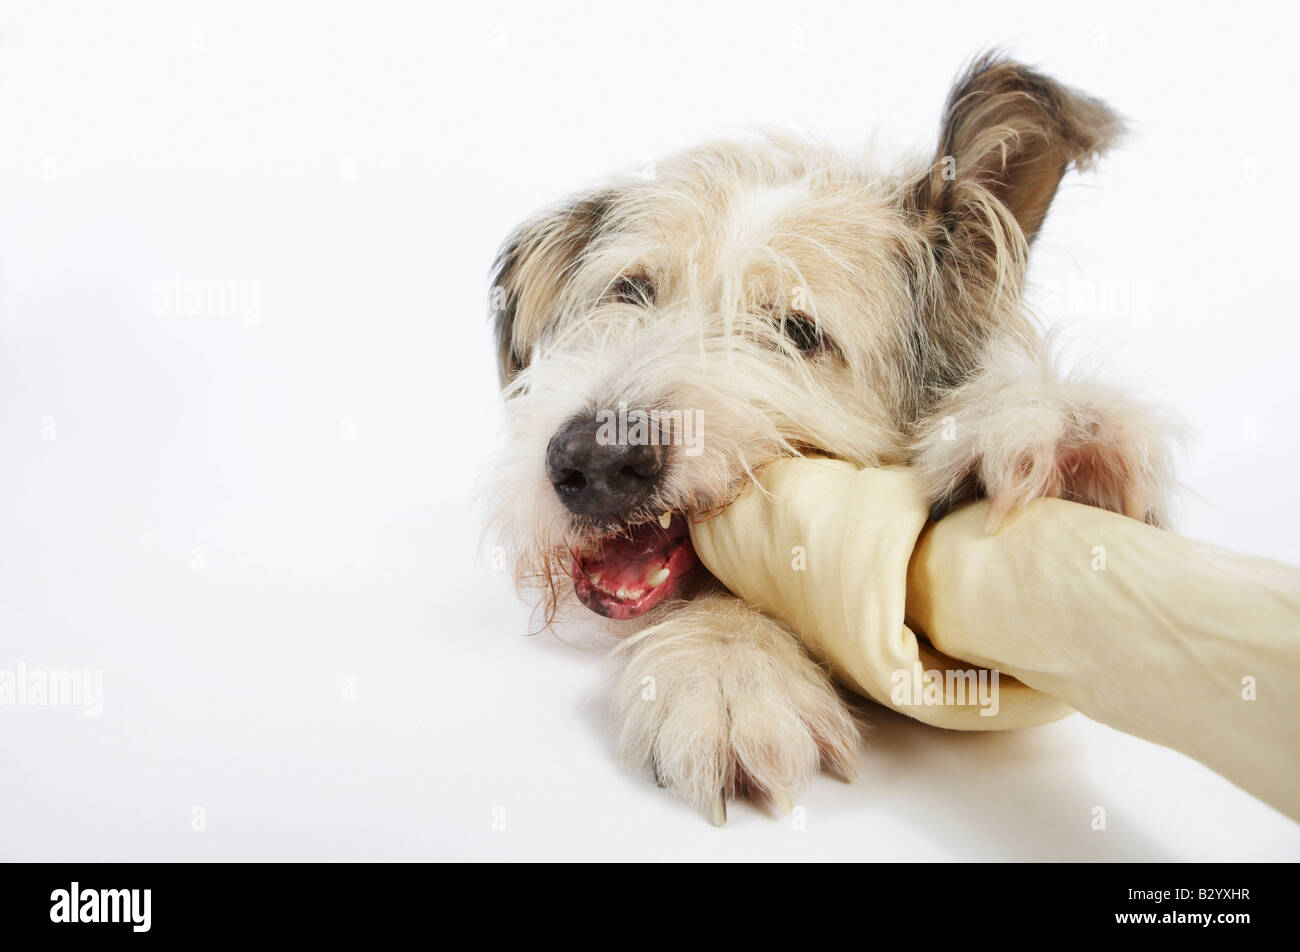 Hund auf Rohhaut Knochen kauen Stockfotografie - Alamy